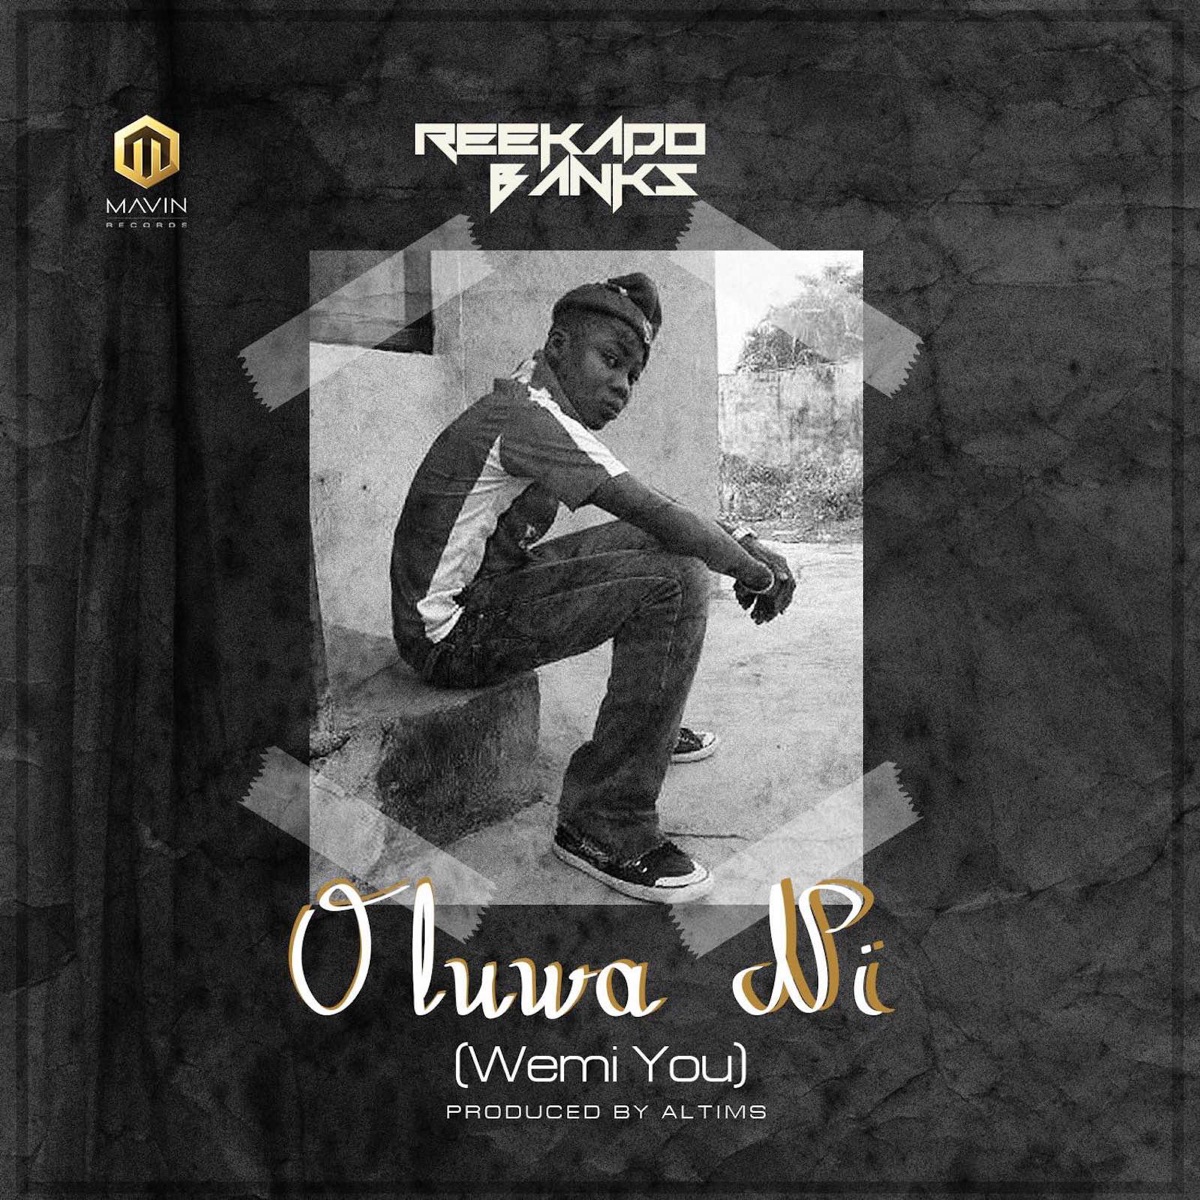 Reekado Banks - Oluwa Ni (Wemi You) - Single